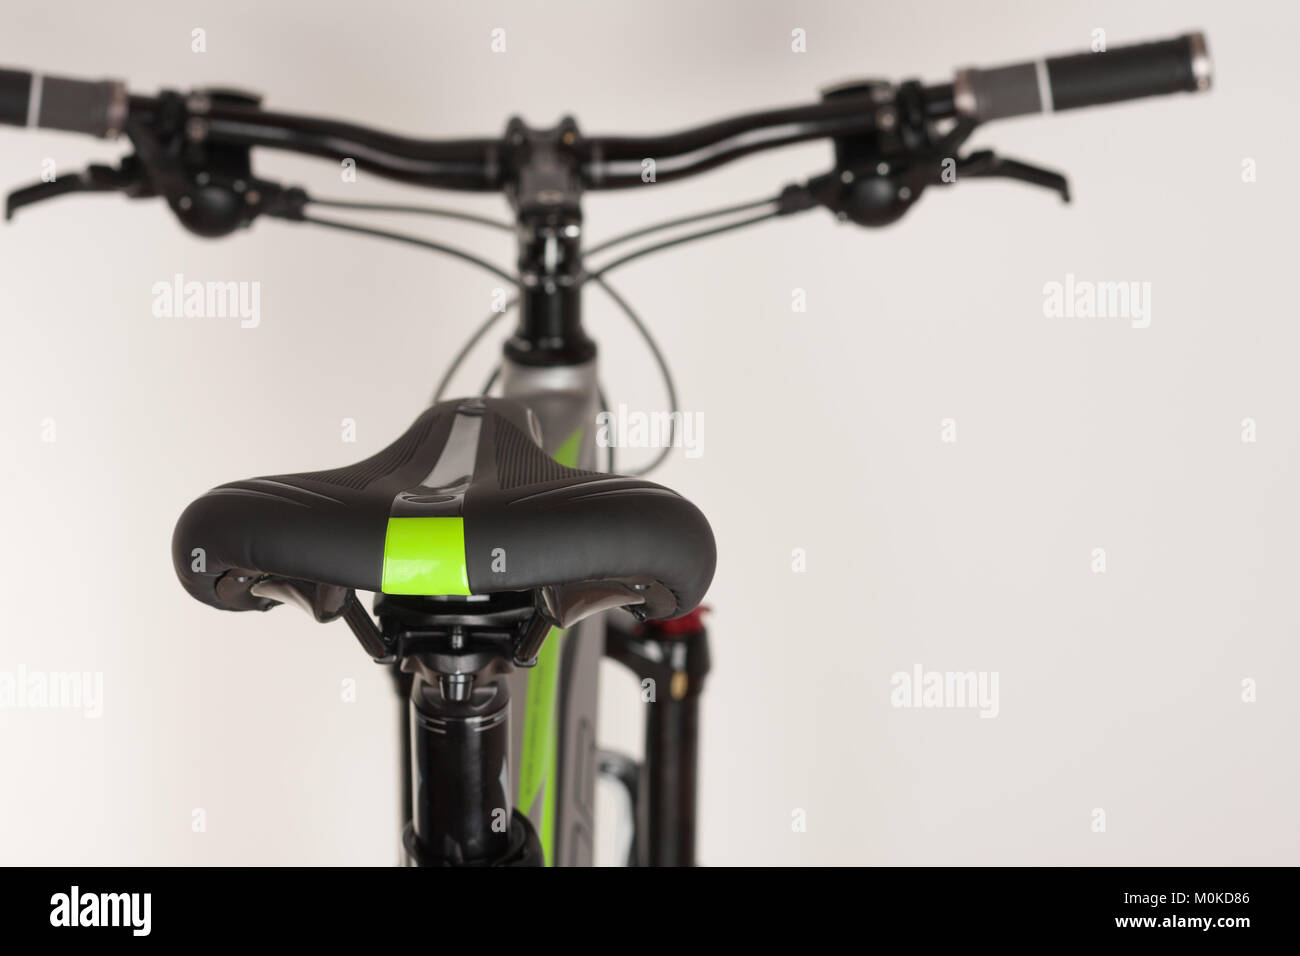 Bike saddle on white background, close up view, studio photo Stock Photo